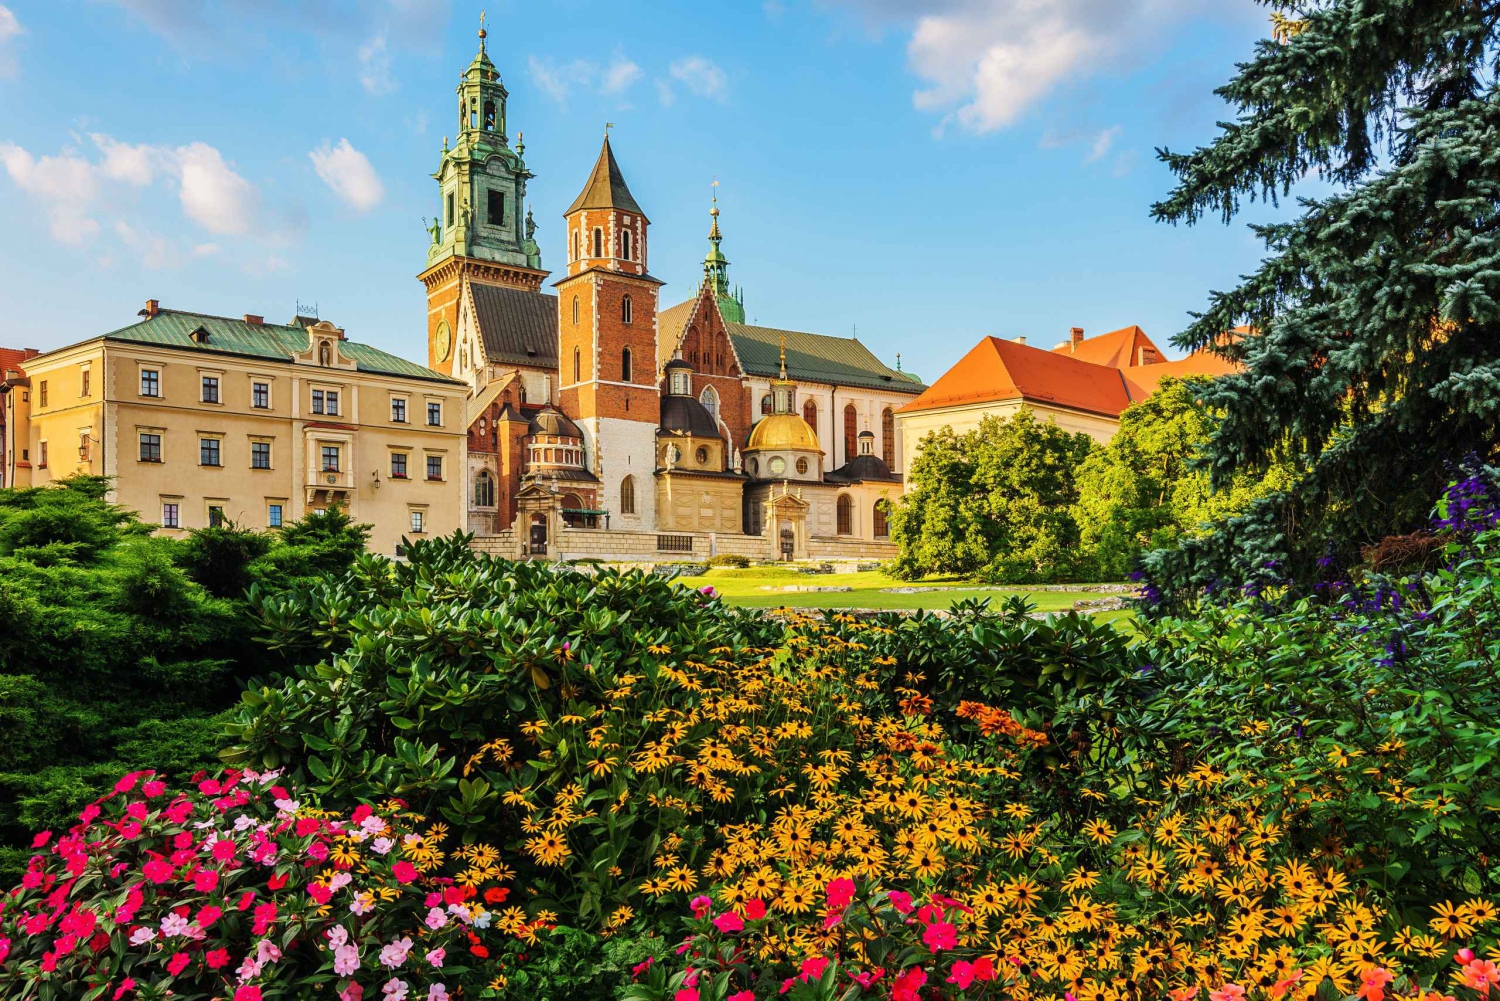 Krakow: Wawel Castle and Wawel Hill Audioguide Tour